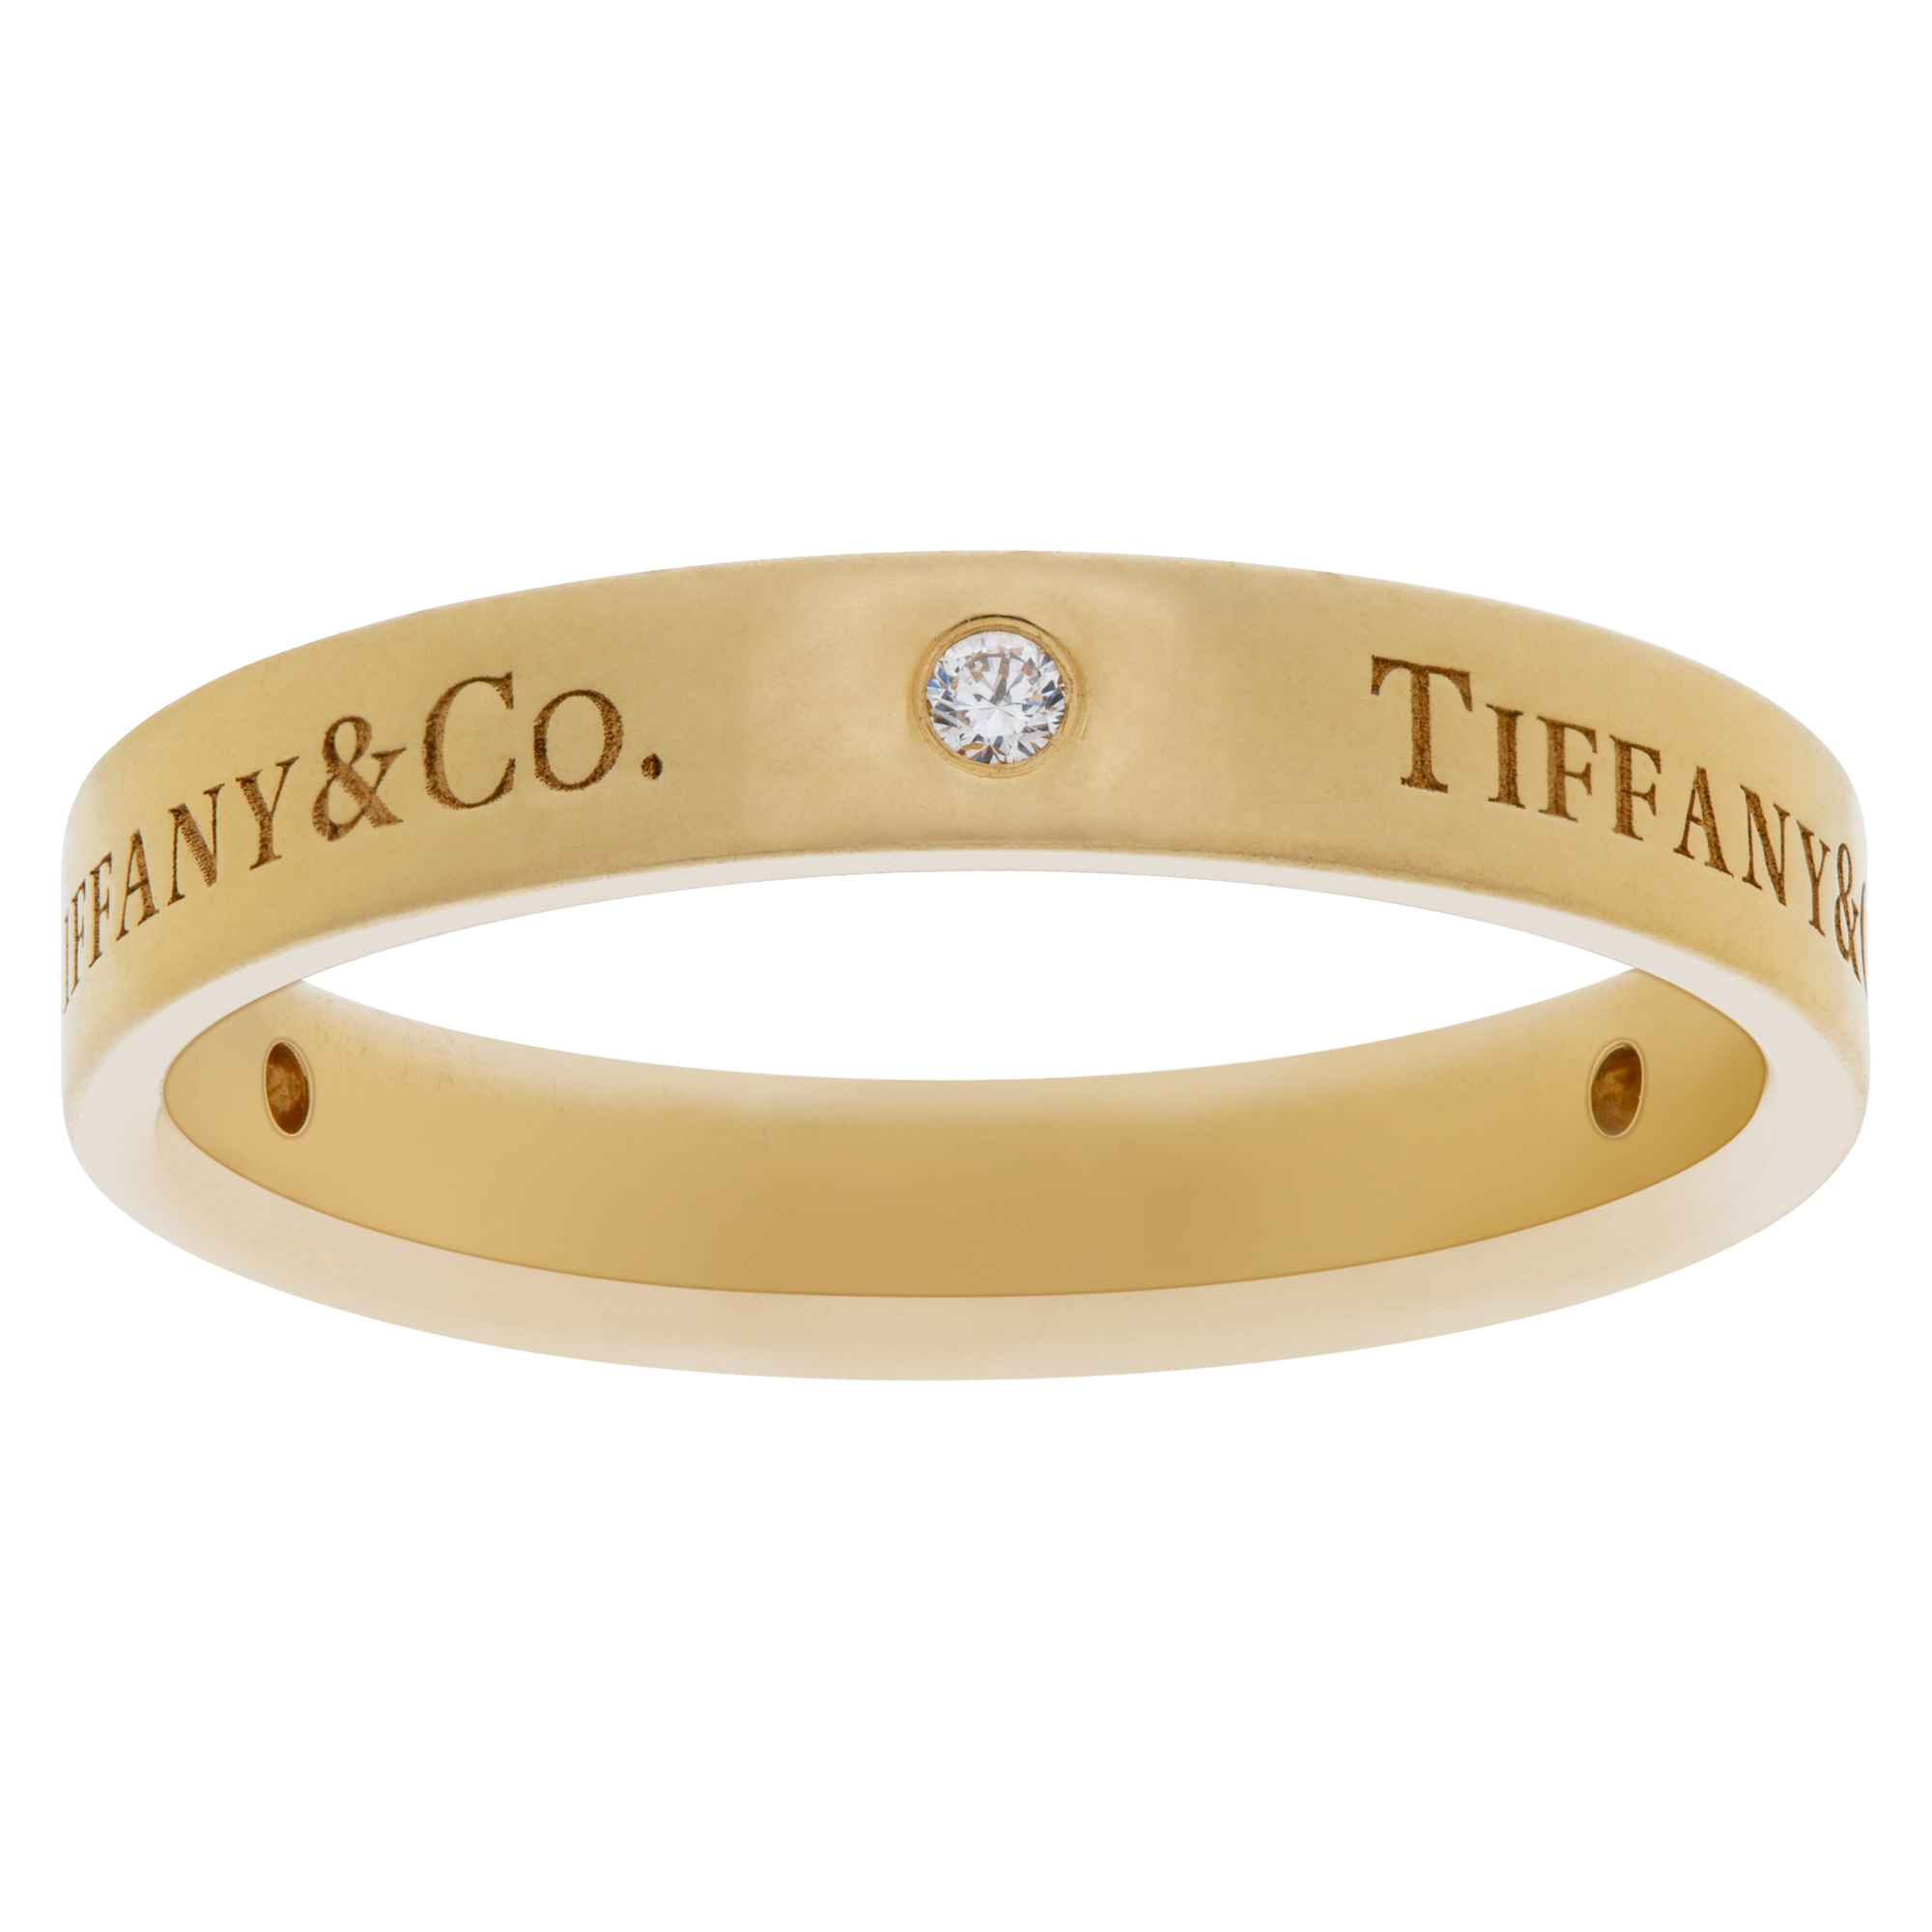 Tiffany & Co. 18k gold band ring with three round brilliant diamonds image 1